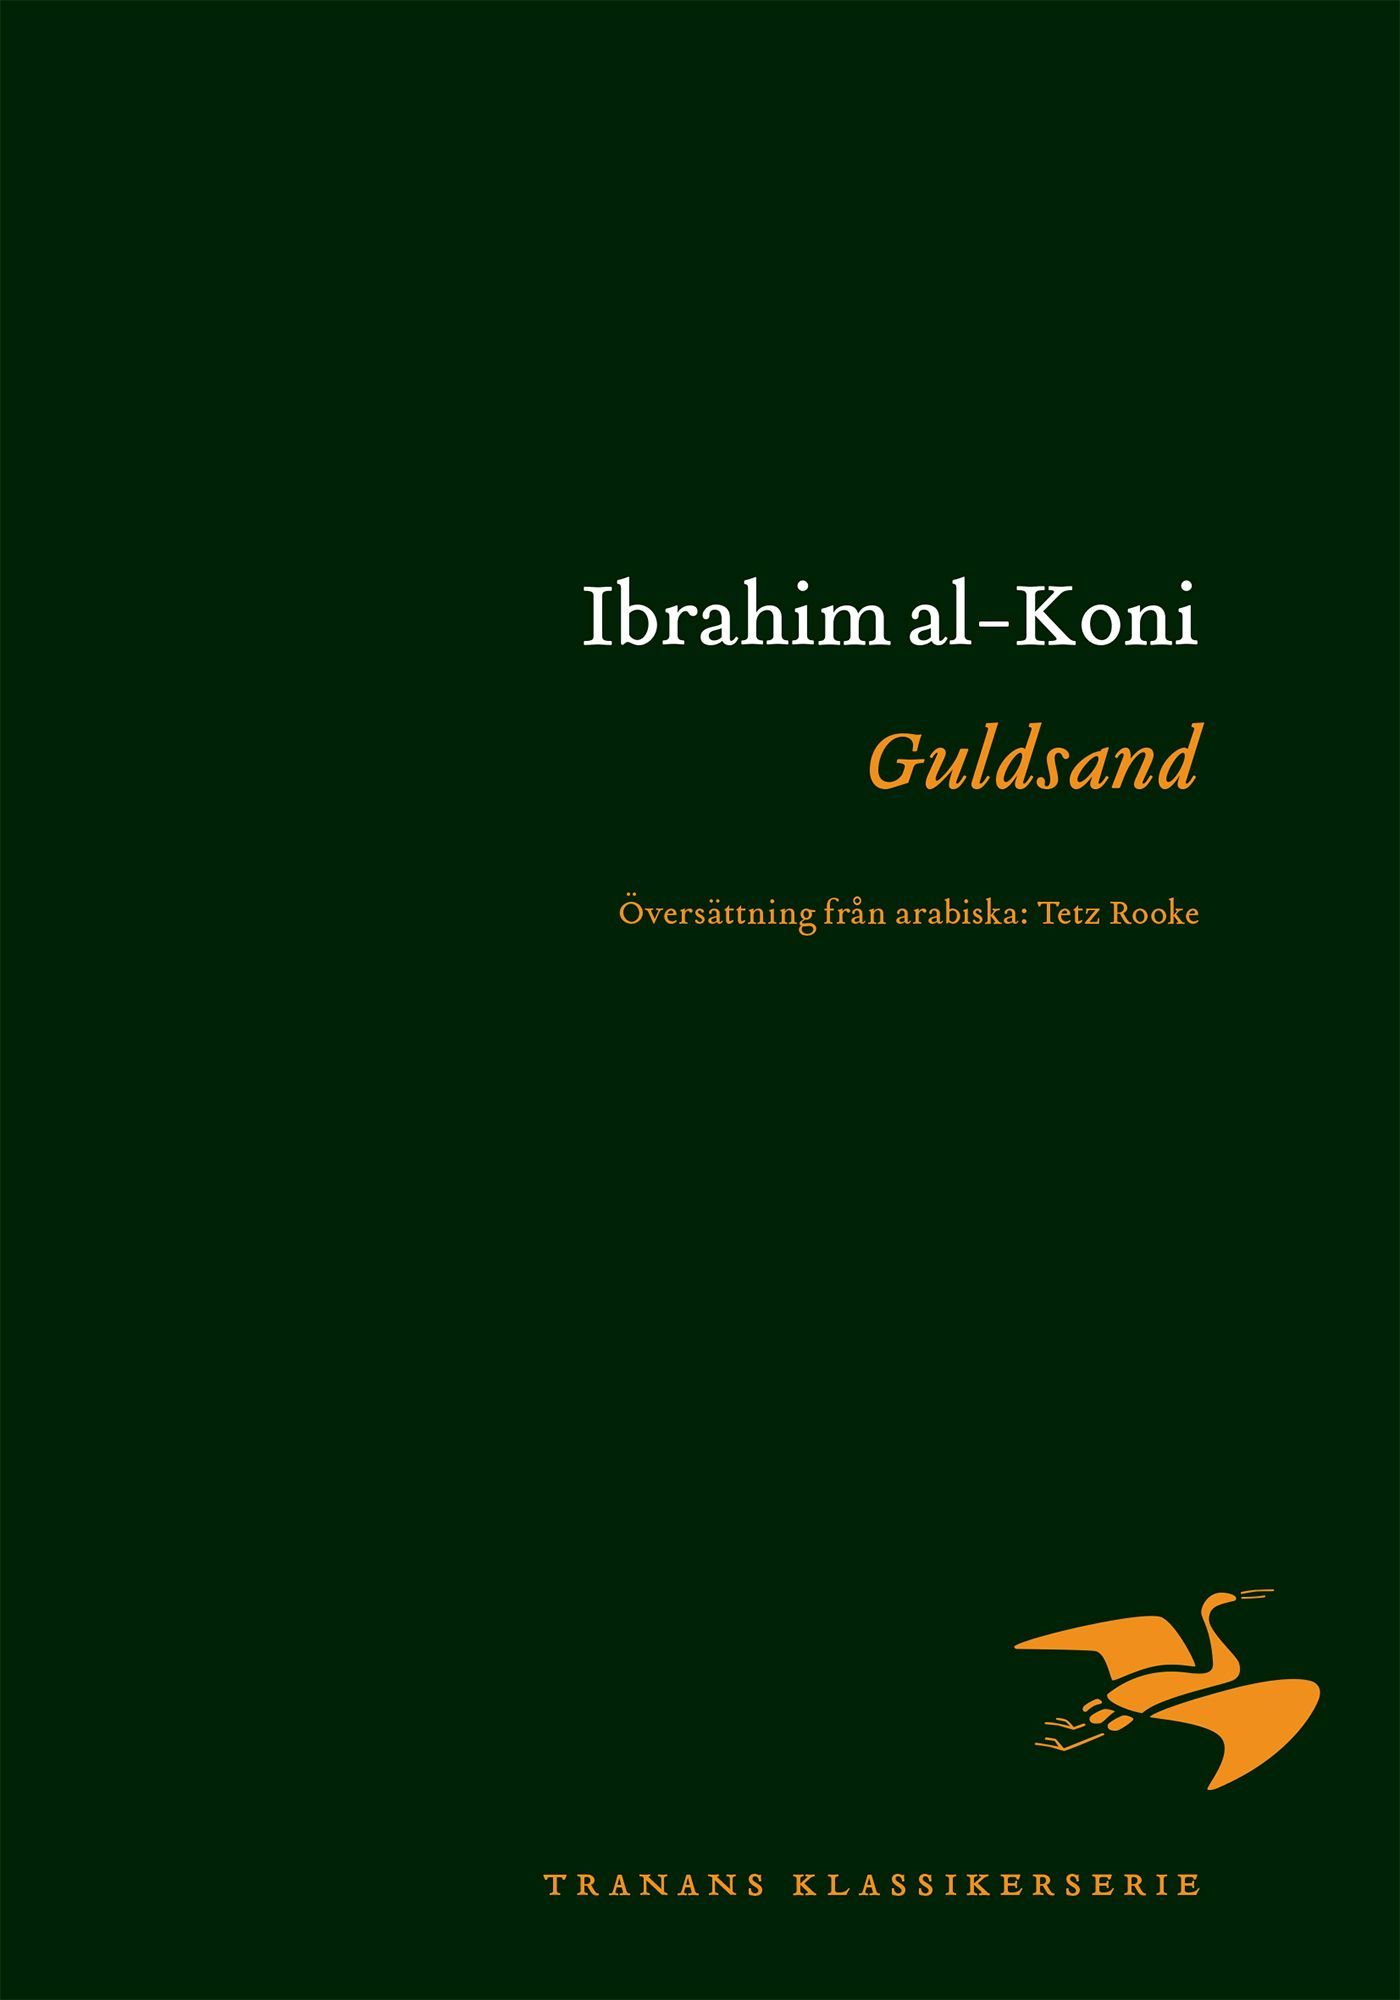 Guldsand, eBook by Ibrahim al-Koni